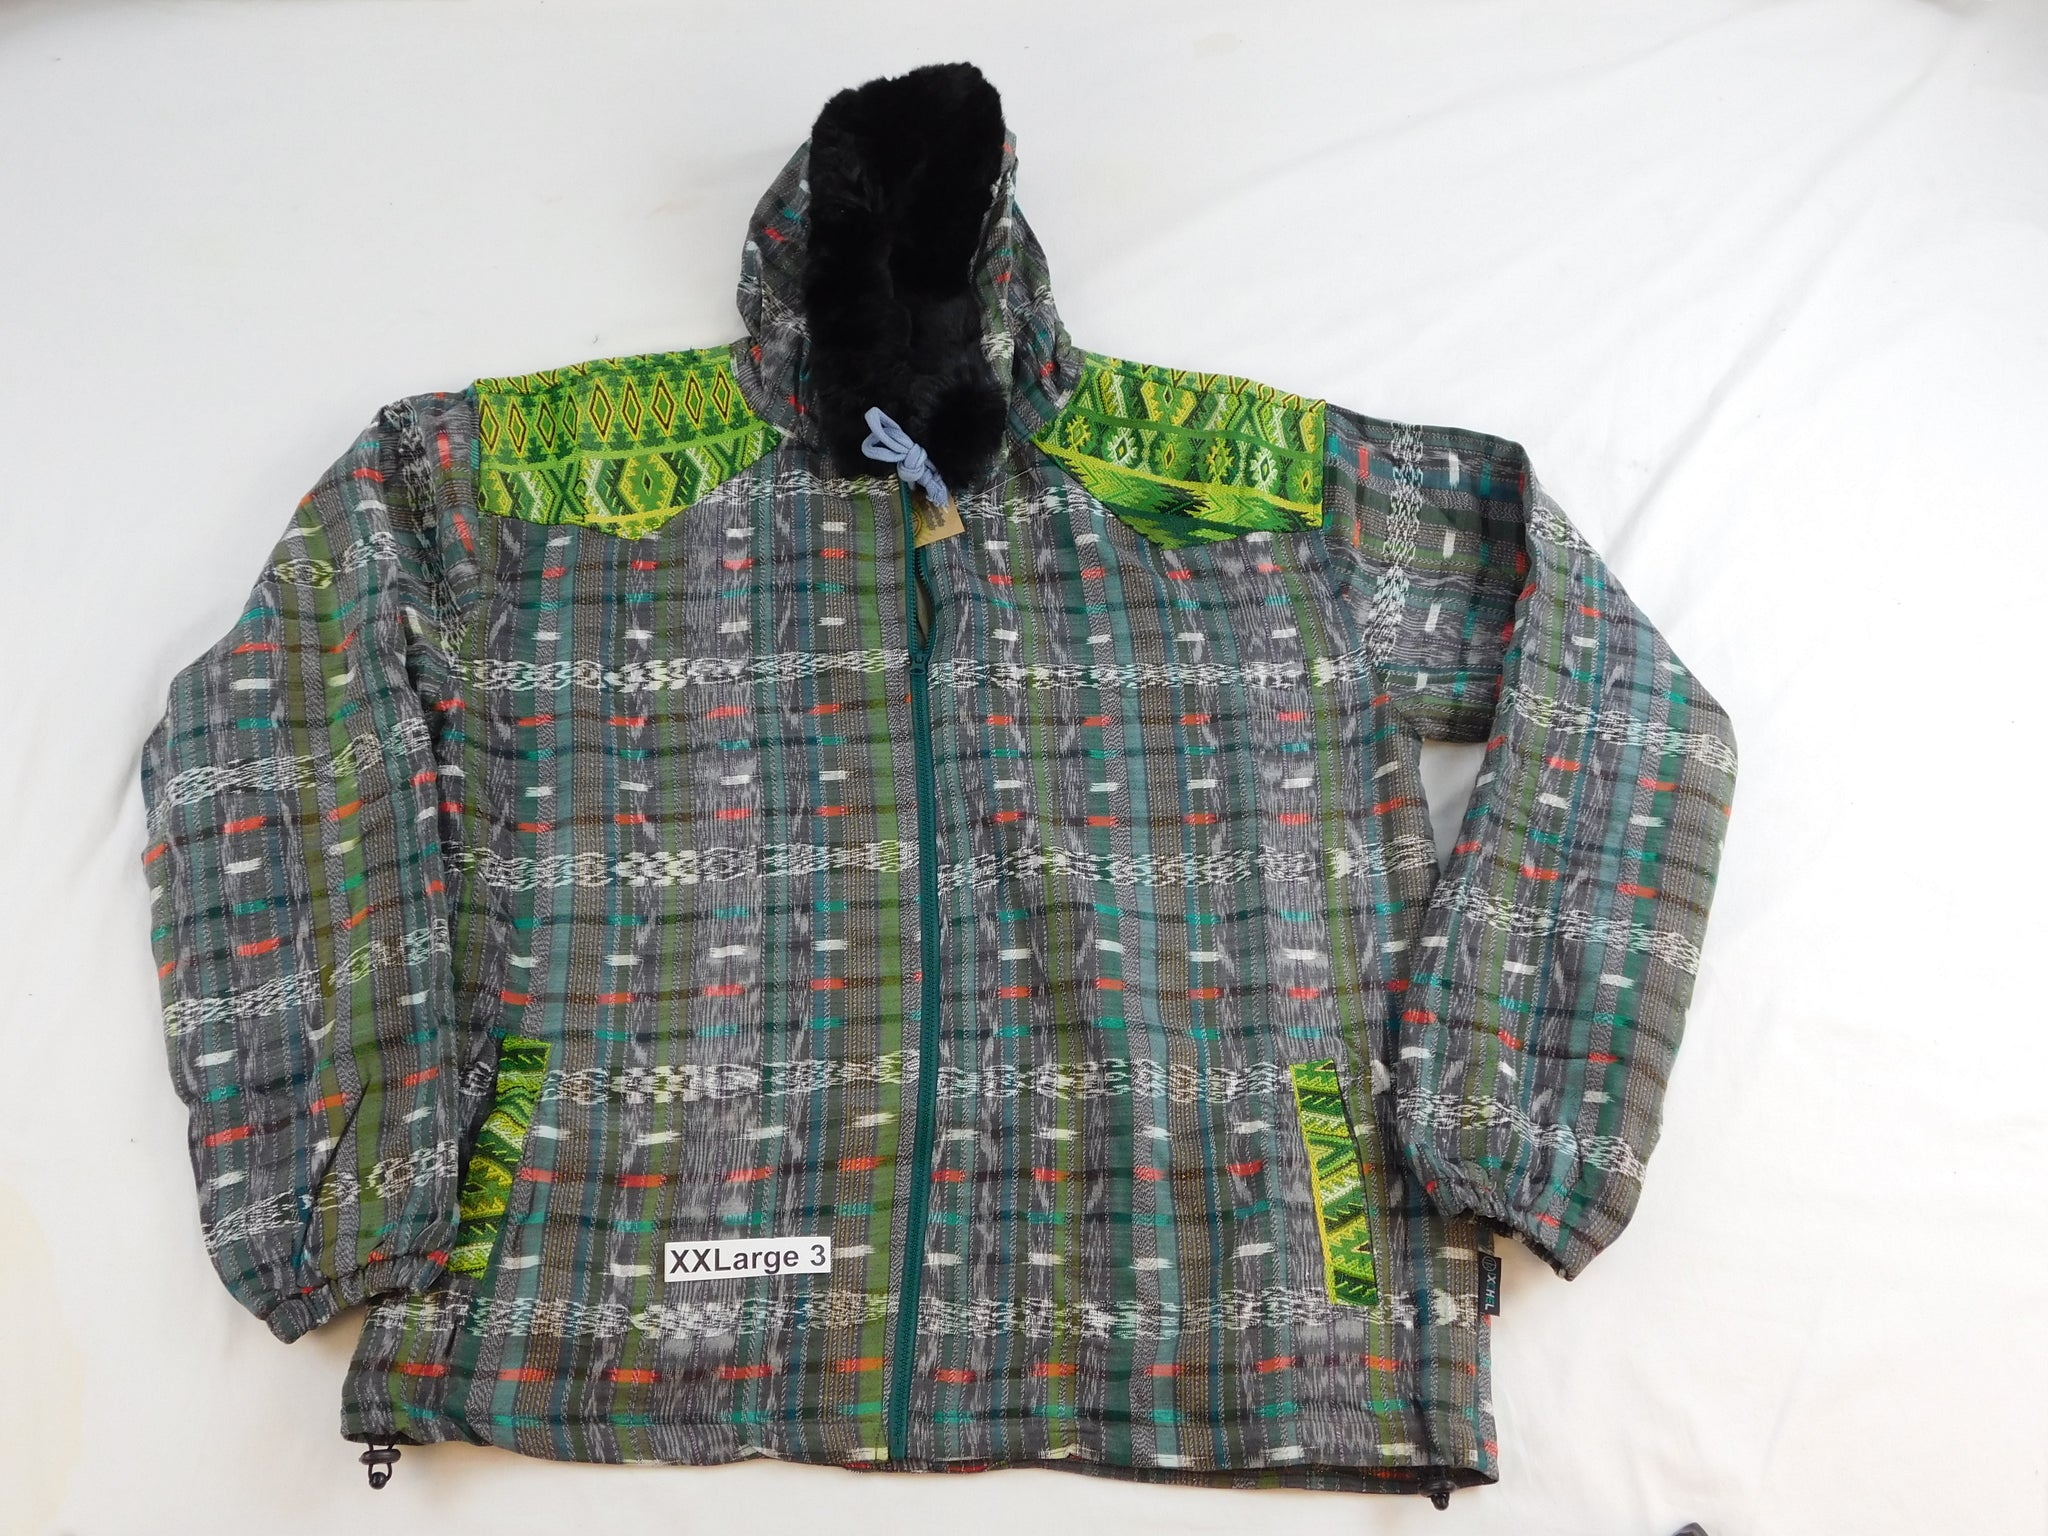 Hooded  jacket in native Ikat and brocade fleece lined with fur hood